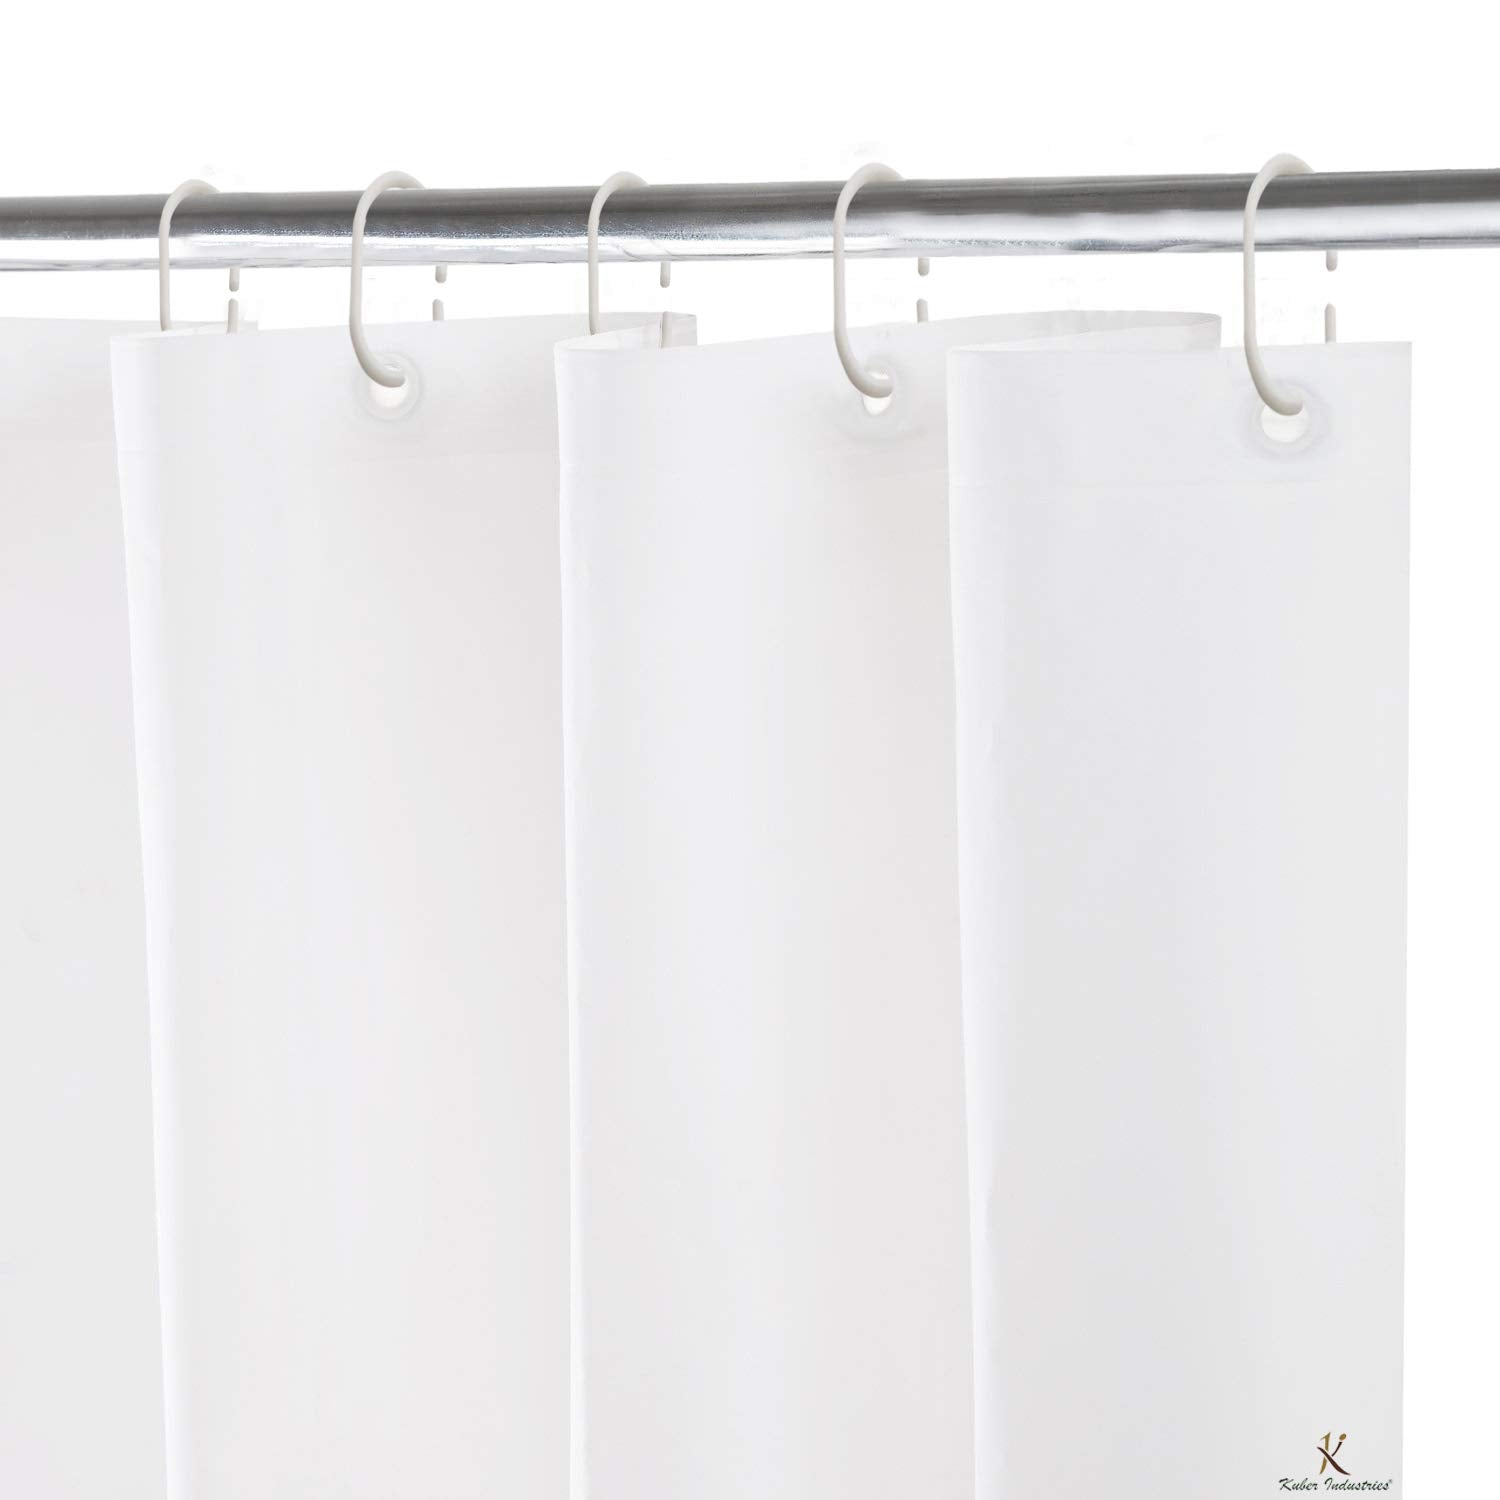 Kuber Industries 2 Pieces PEVA Shower Curtain Liner, Heavy Duty Plastic Shower Curtain with Hooks for Bathroom, Bathtub, 70" x 80", White-KUBMART11550